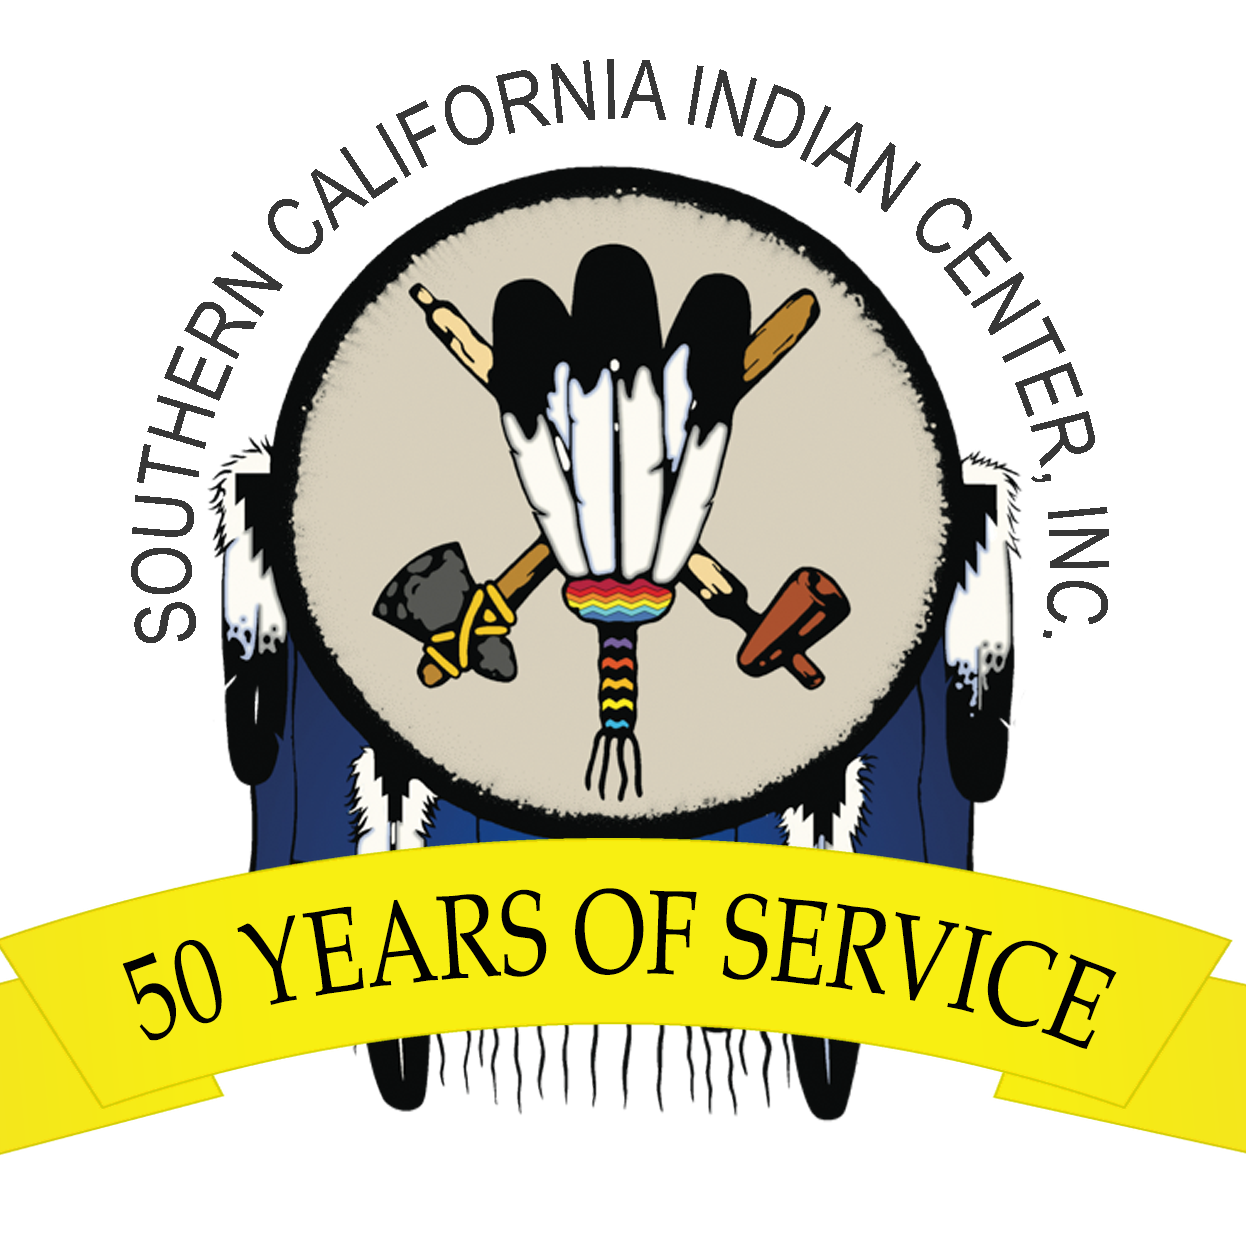 Native American Organization in Los Angeles California - Southern California Indian Center, Inc.